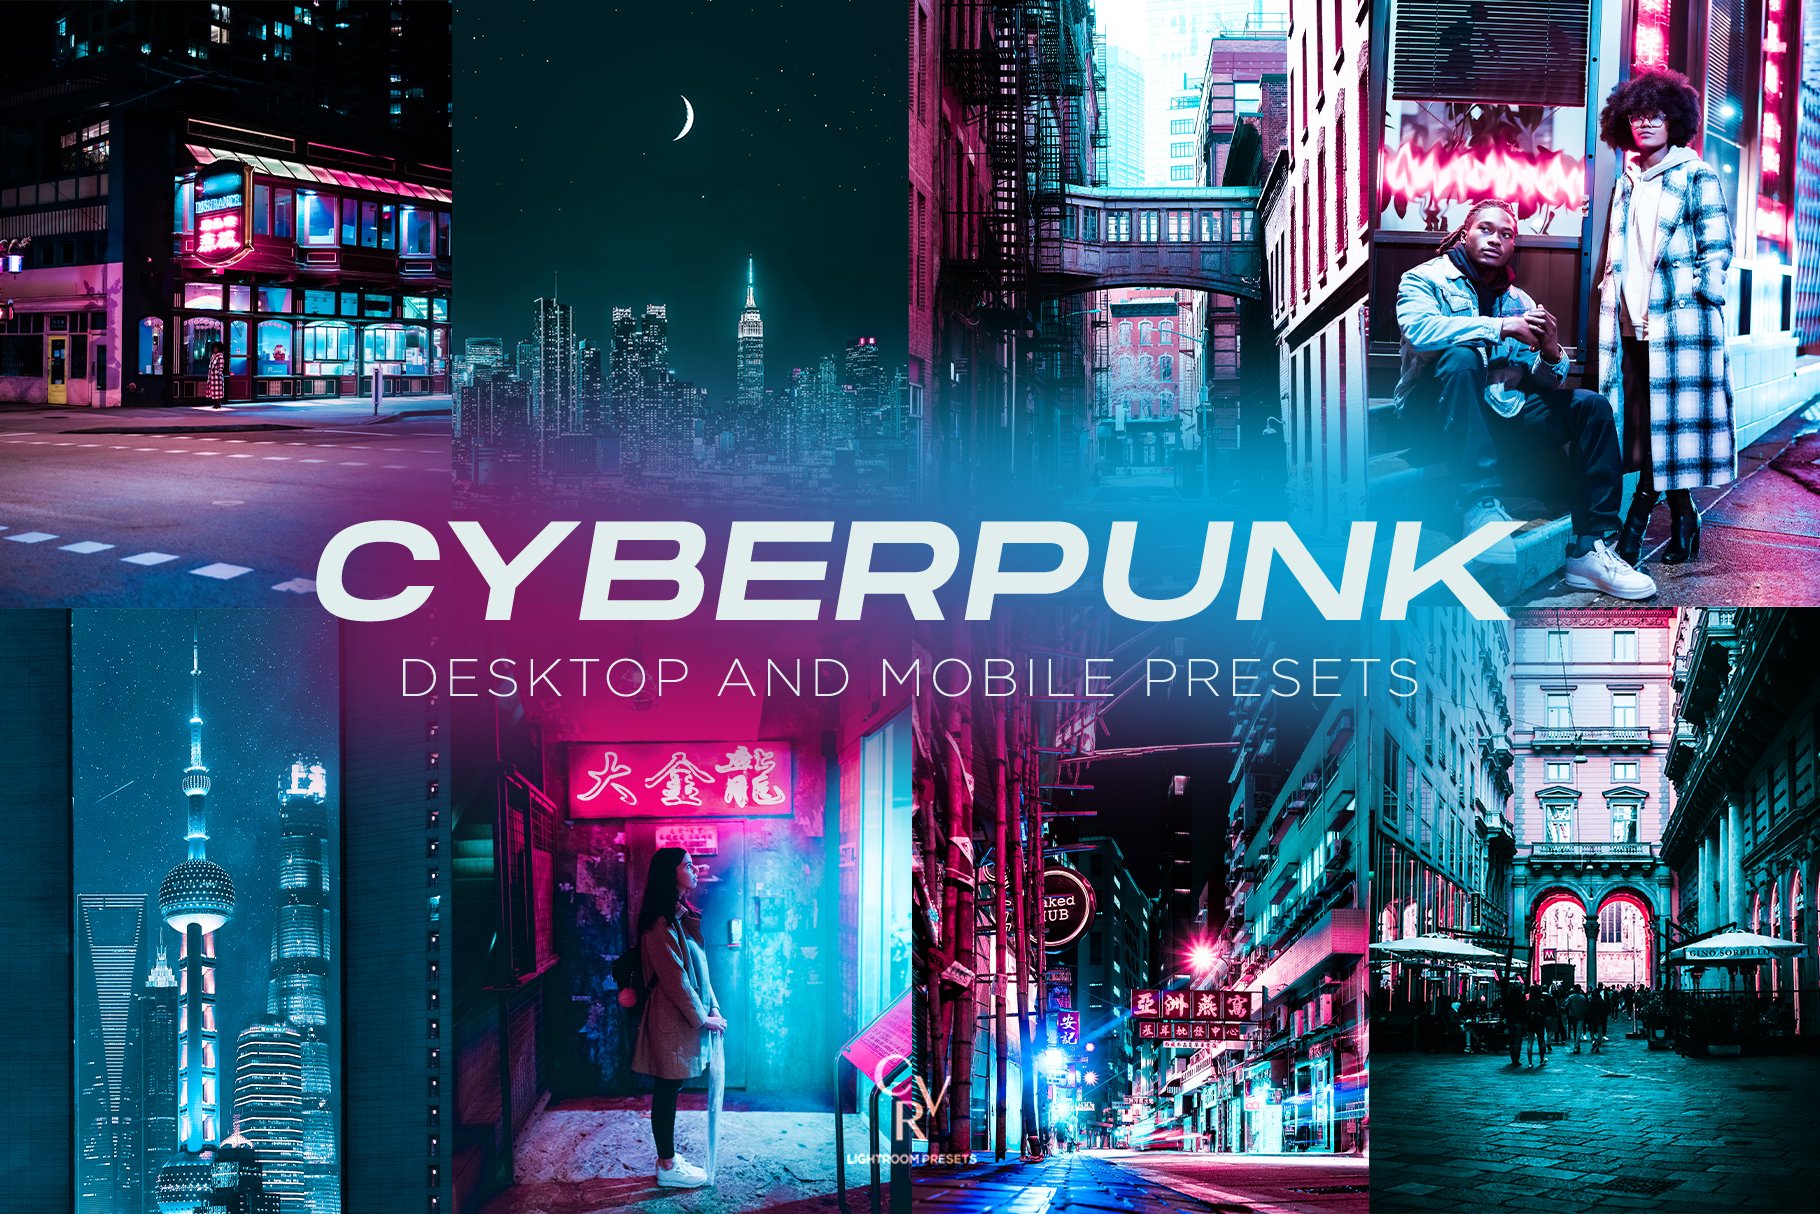 10 Cyberpunk Lightroom Presetscover image.